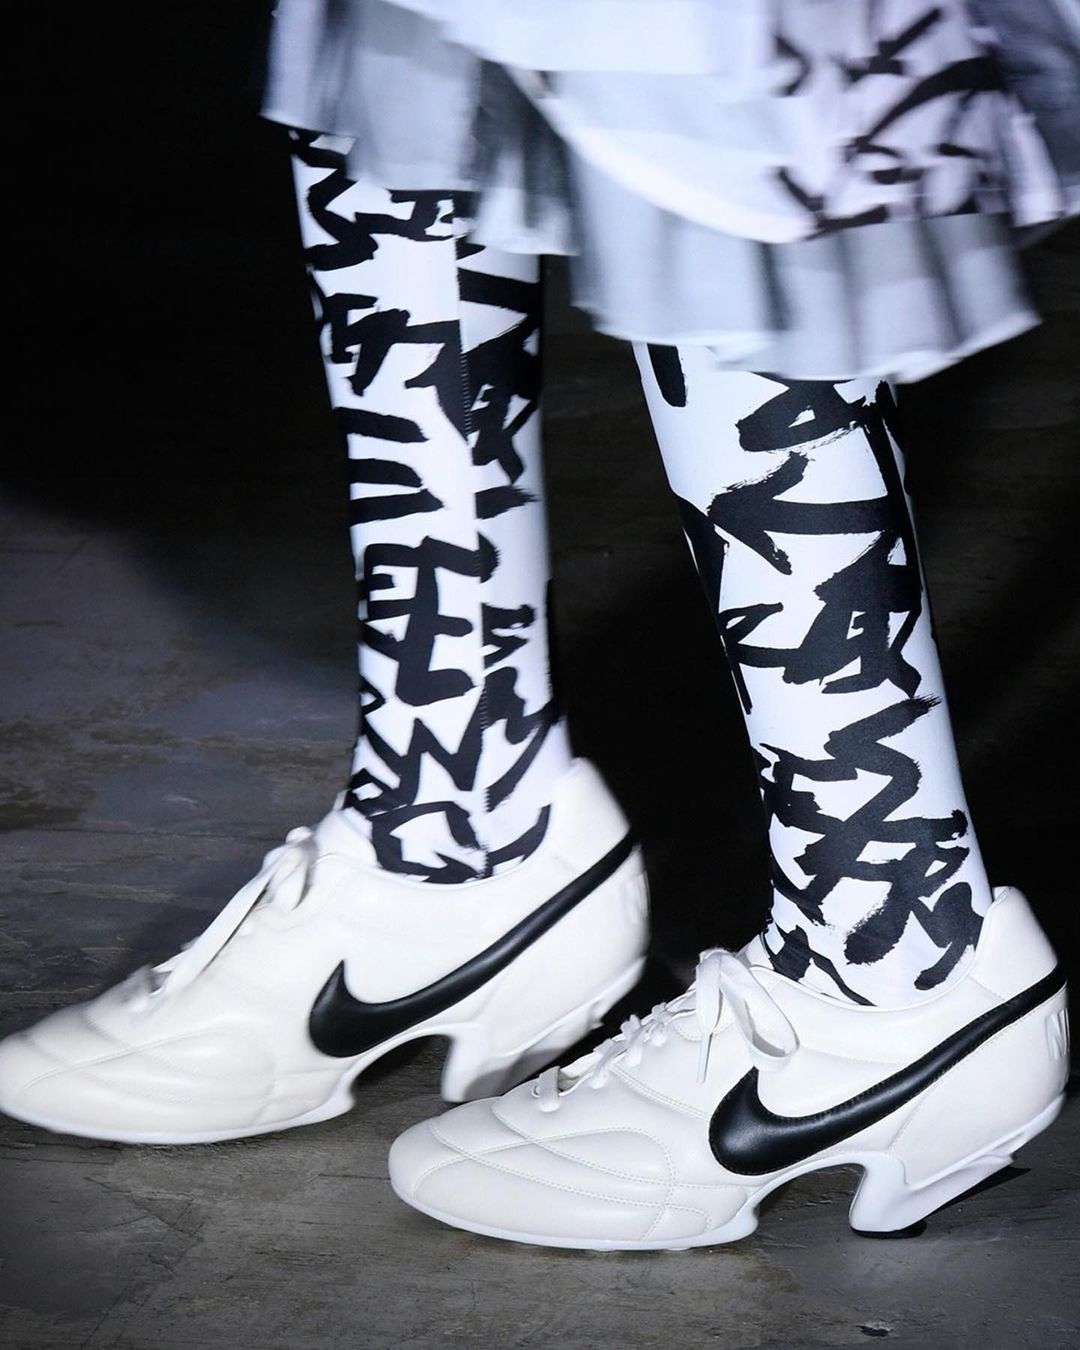 CDG,Nike,发售  CDG x Nike 高跟鞋太秀了呀！今天突袭发售，你敢穿吗？